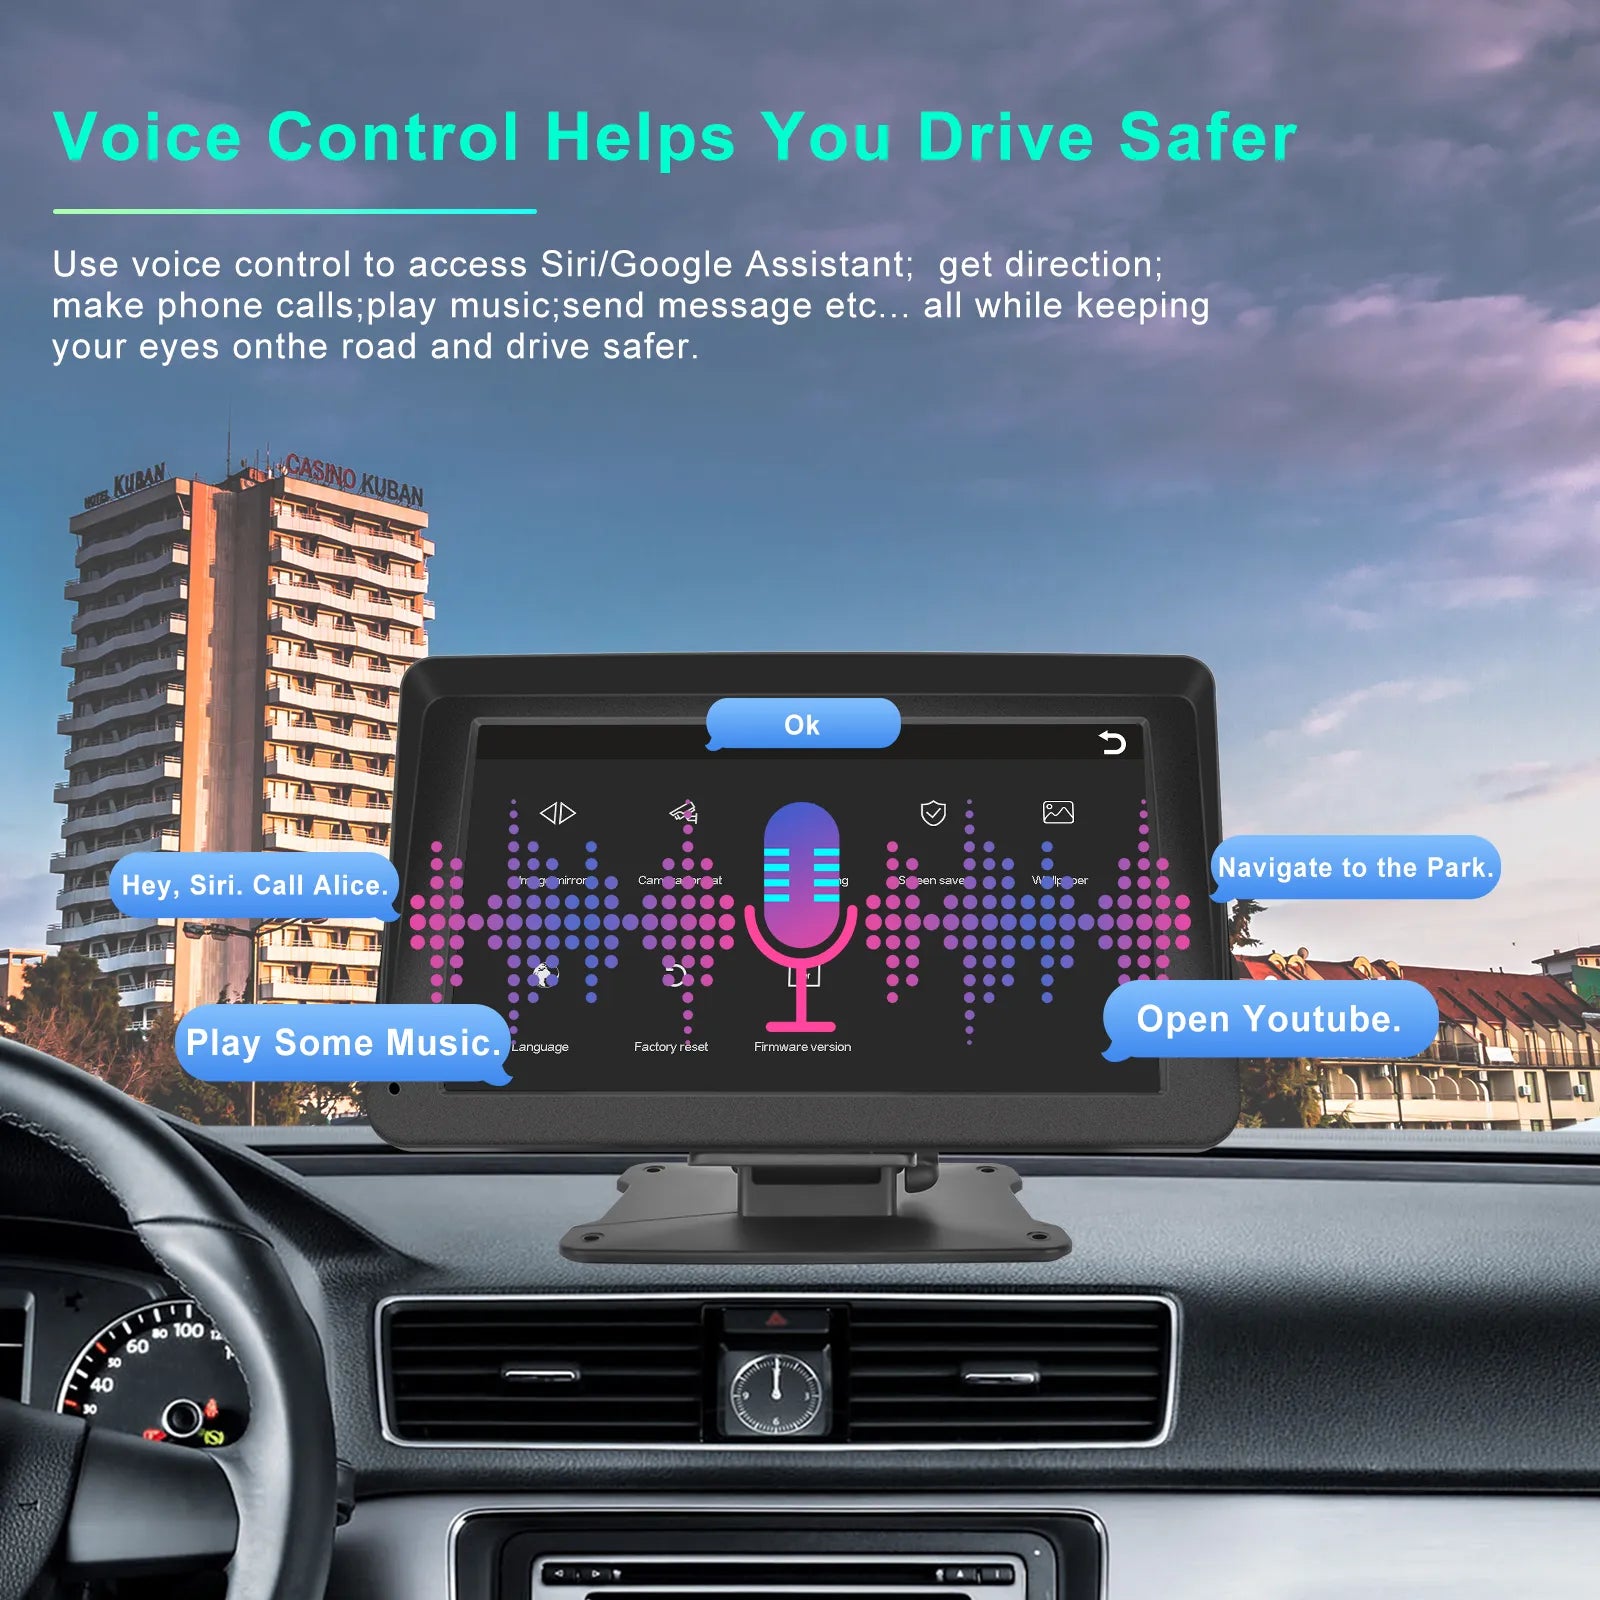 Podofo 7'' Car Mirror Carplay Recording Carplay & Android Auto Voice Control Touch Screen Monitor Car Radio Dashboard DVR